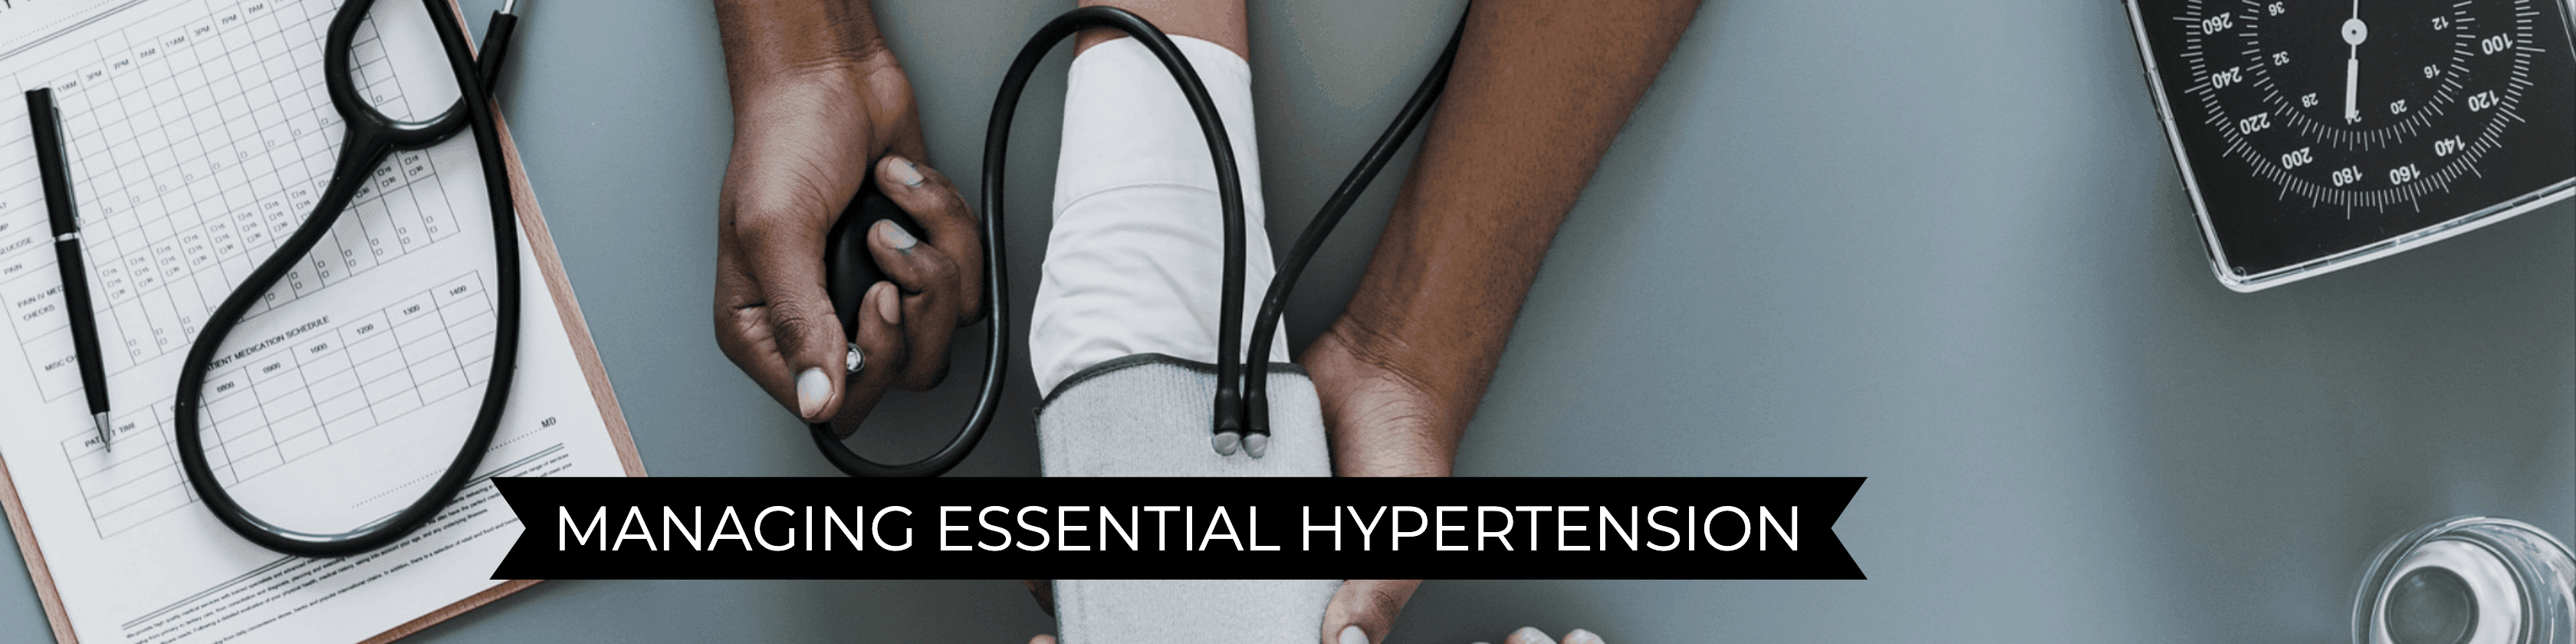 essential hypertension app